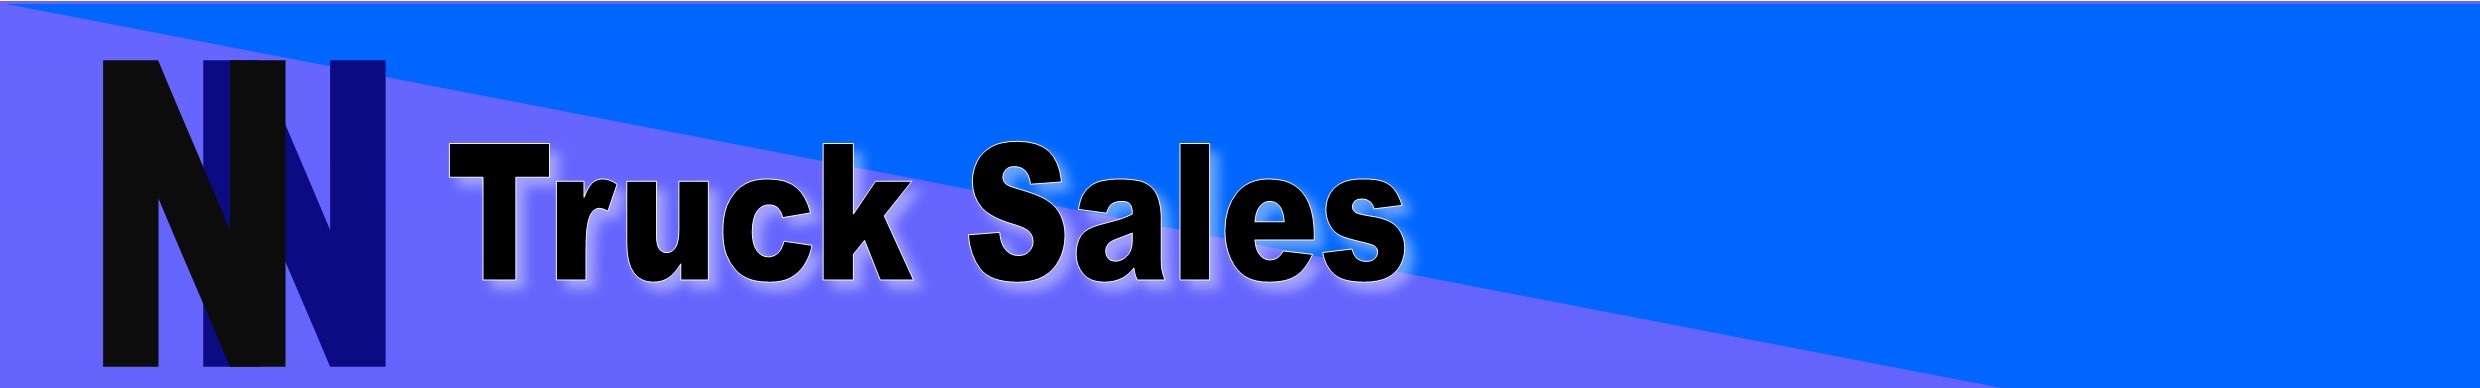 NN Truck Sales - a commercial truck dealer on AgriMag Marketplace